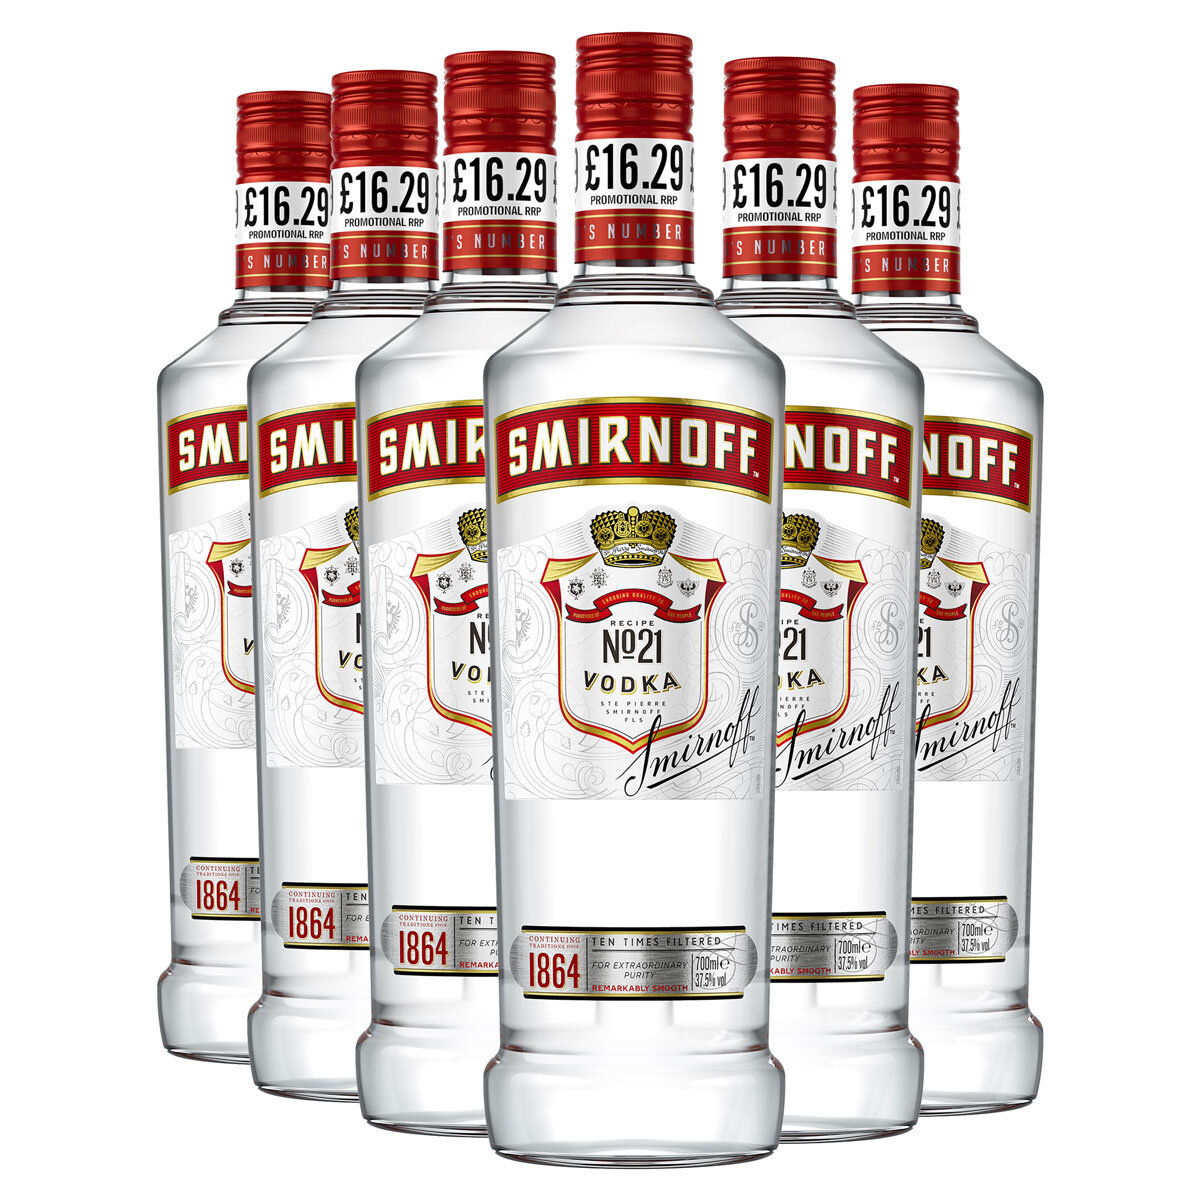 smirnoff-vodka-red-label-6-x-70cl-16-29-pmp-costco-uk